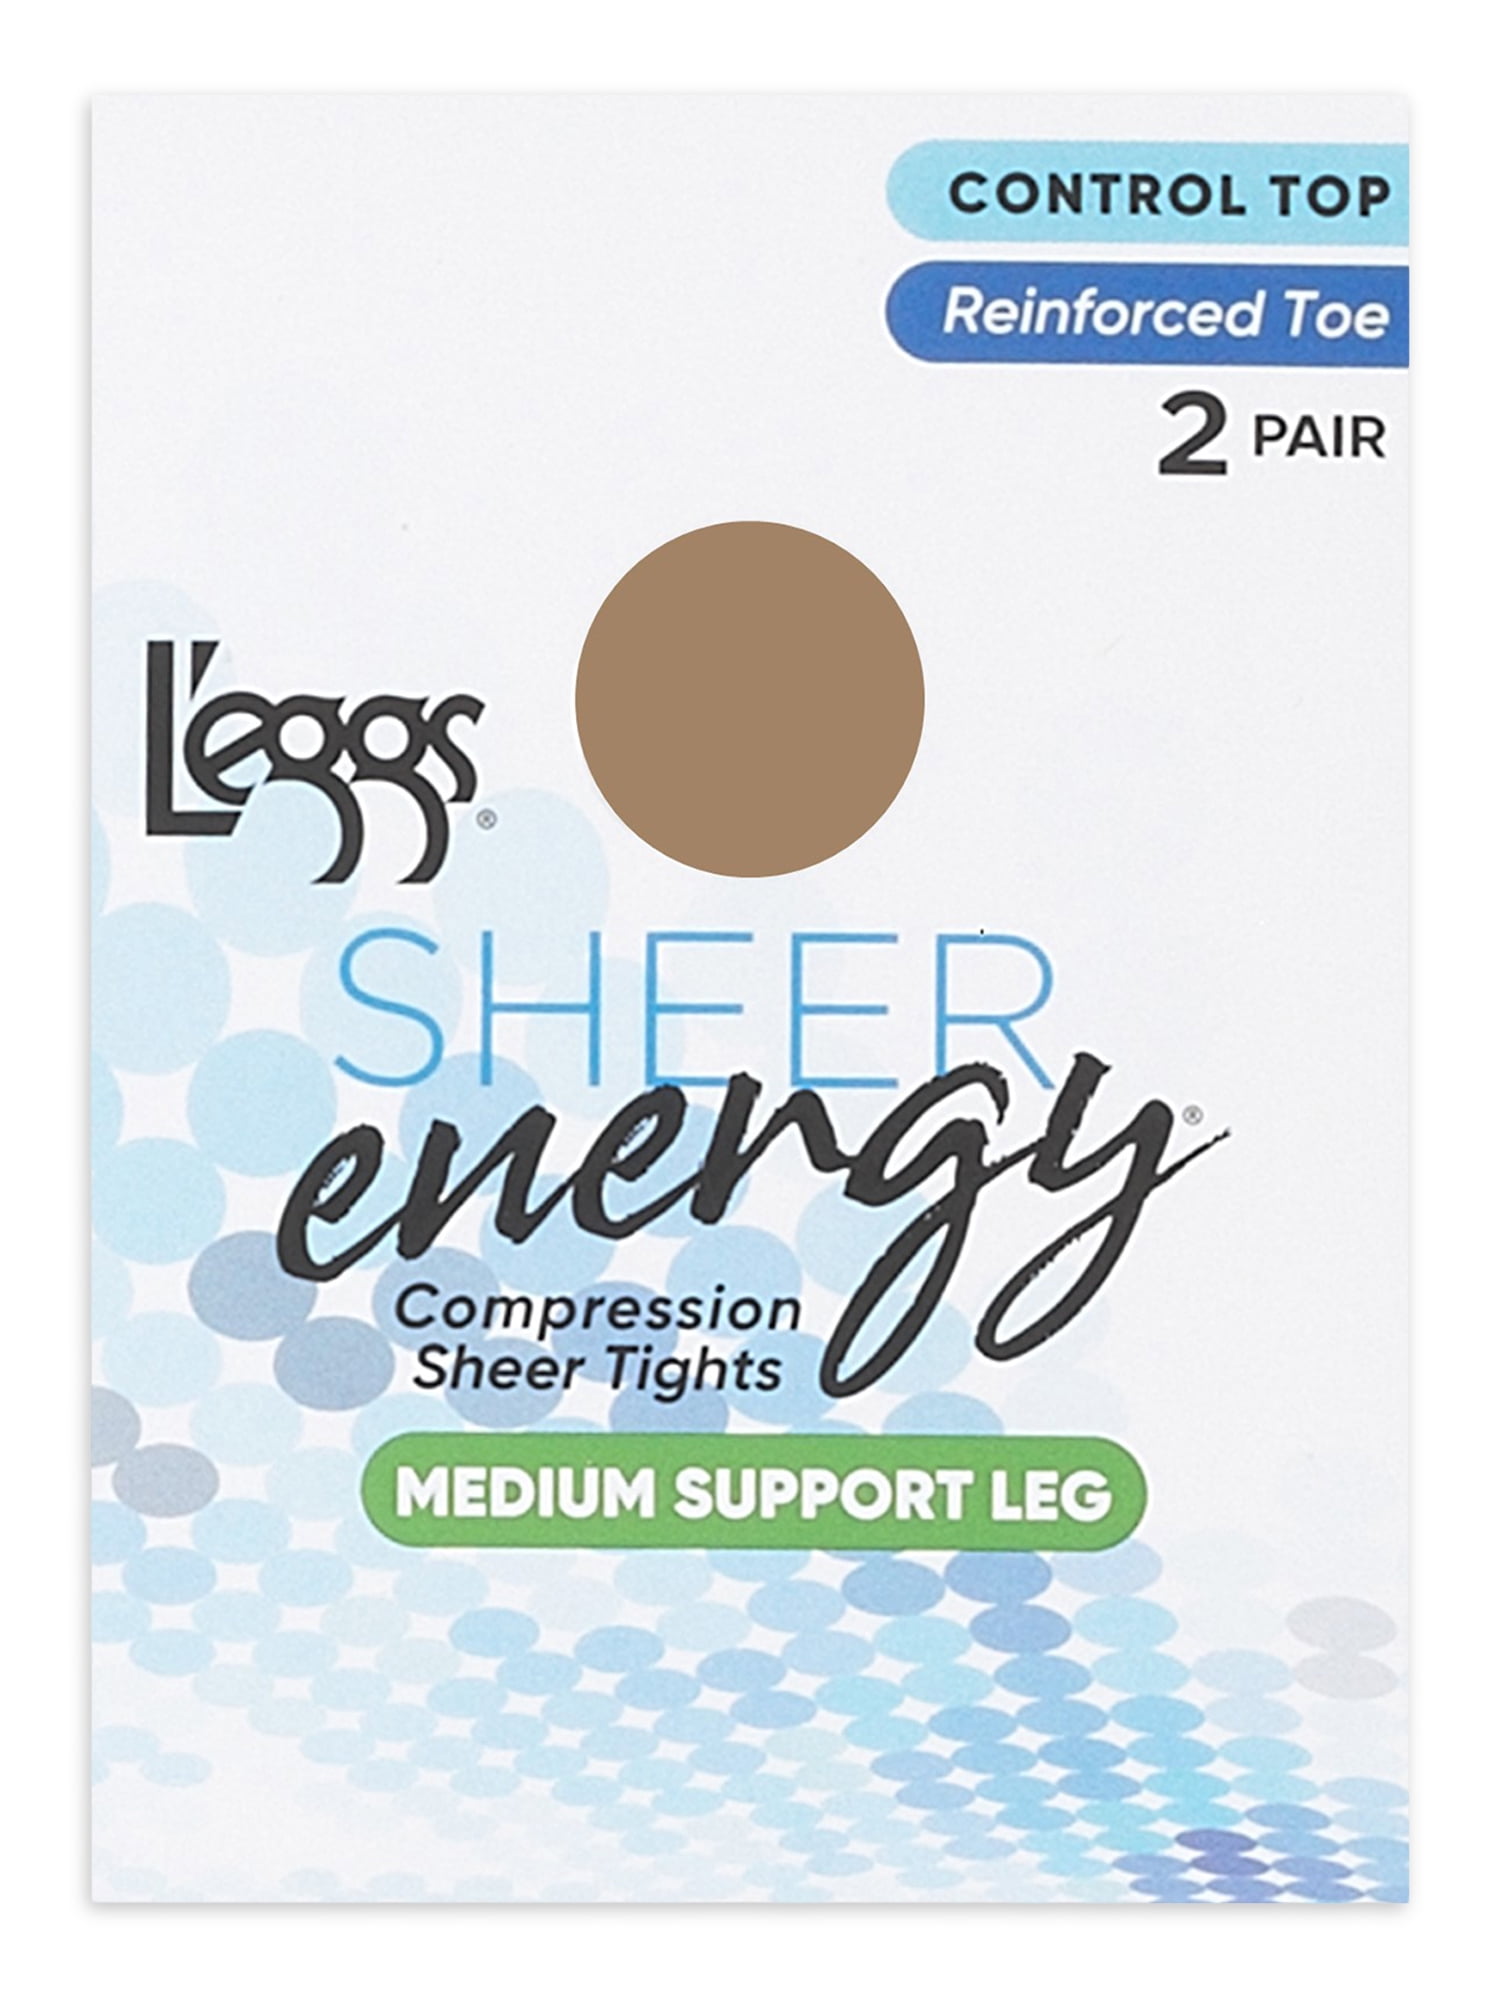 L'eggs Sheer Energy Medium Leg Support Control Top Reinforced Toe